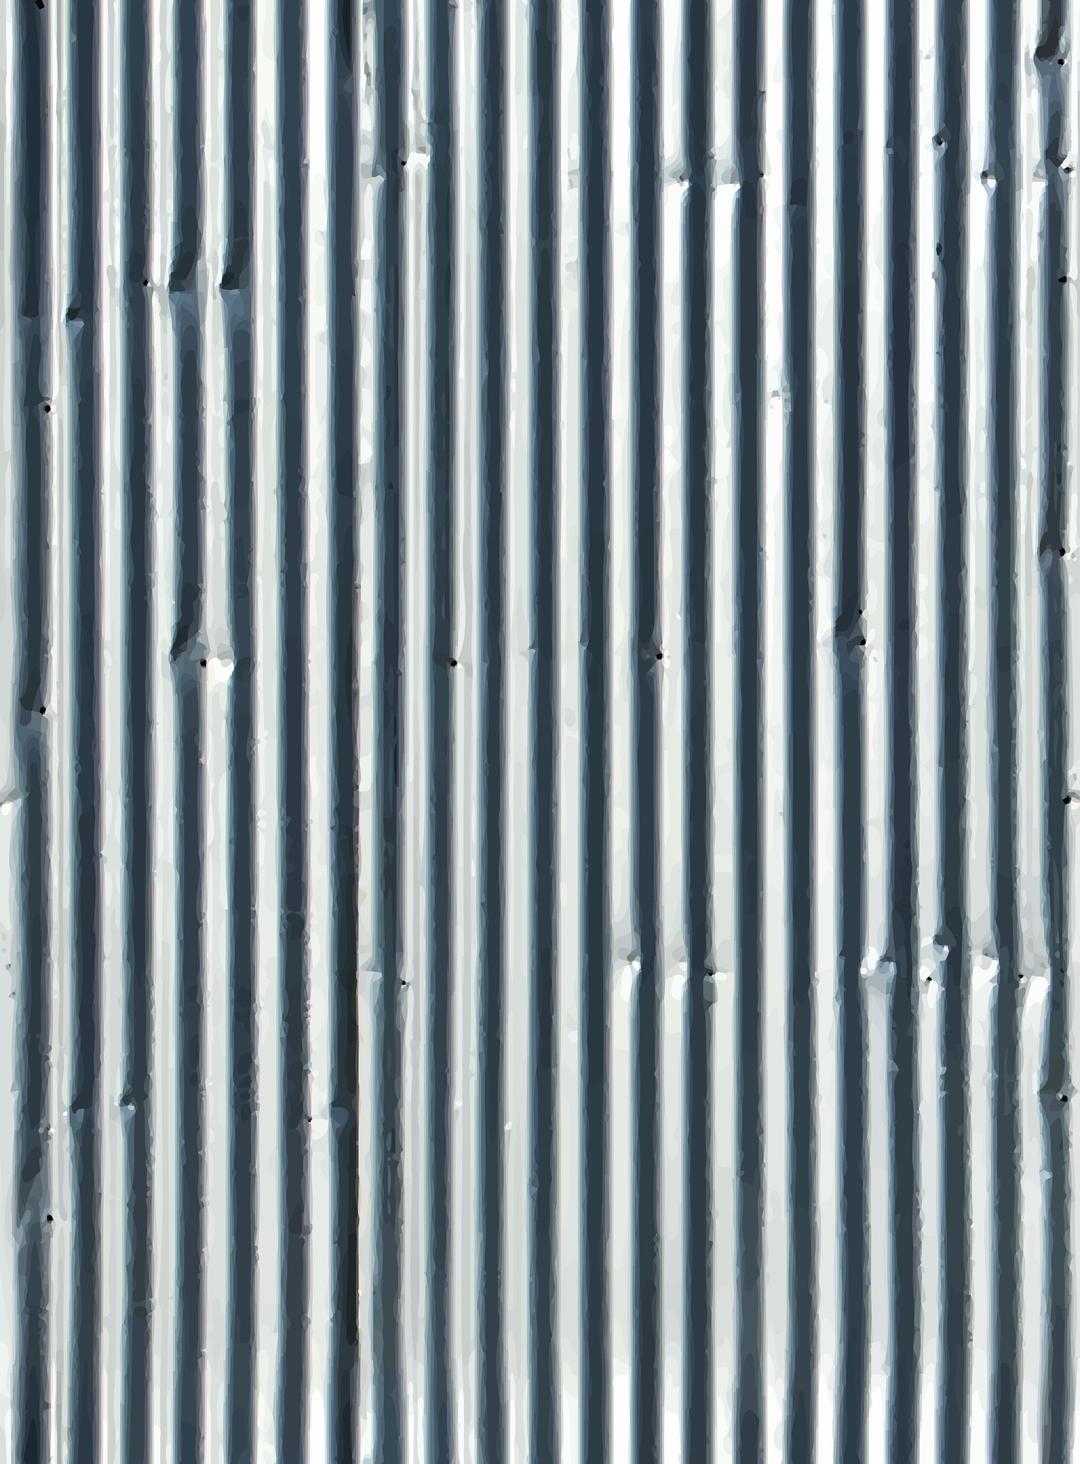 Corrugated metal png transparent